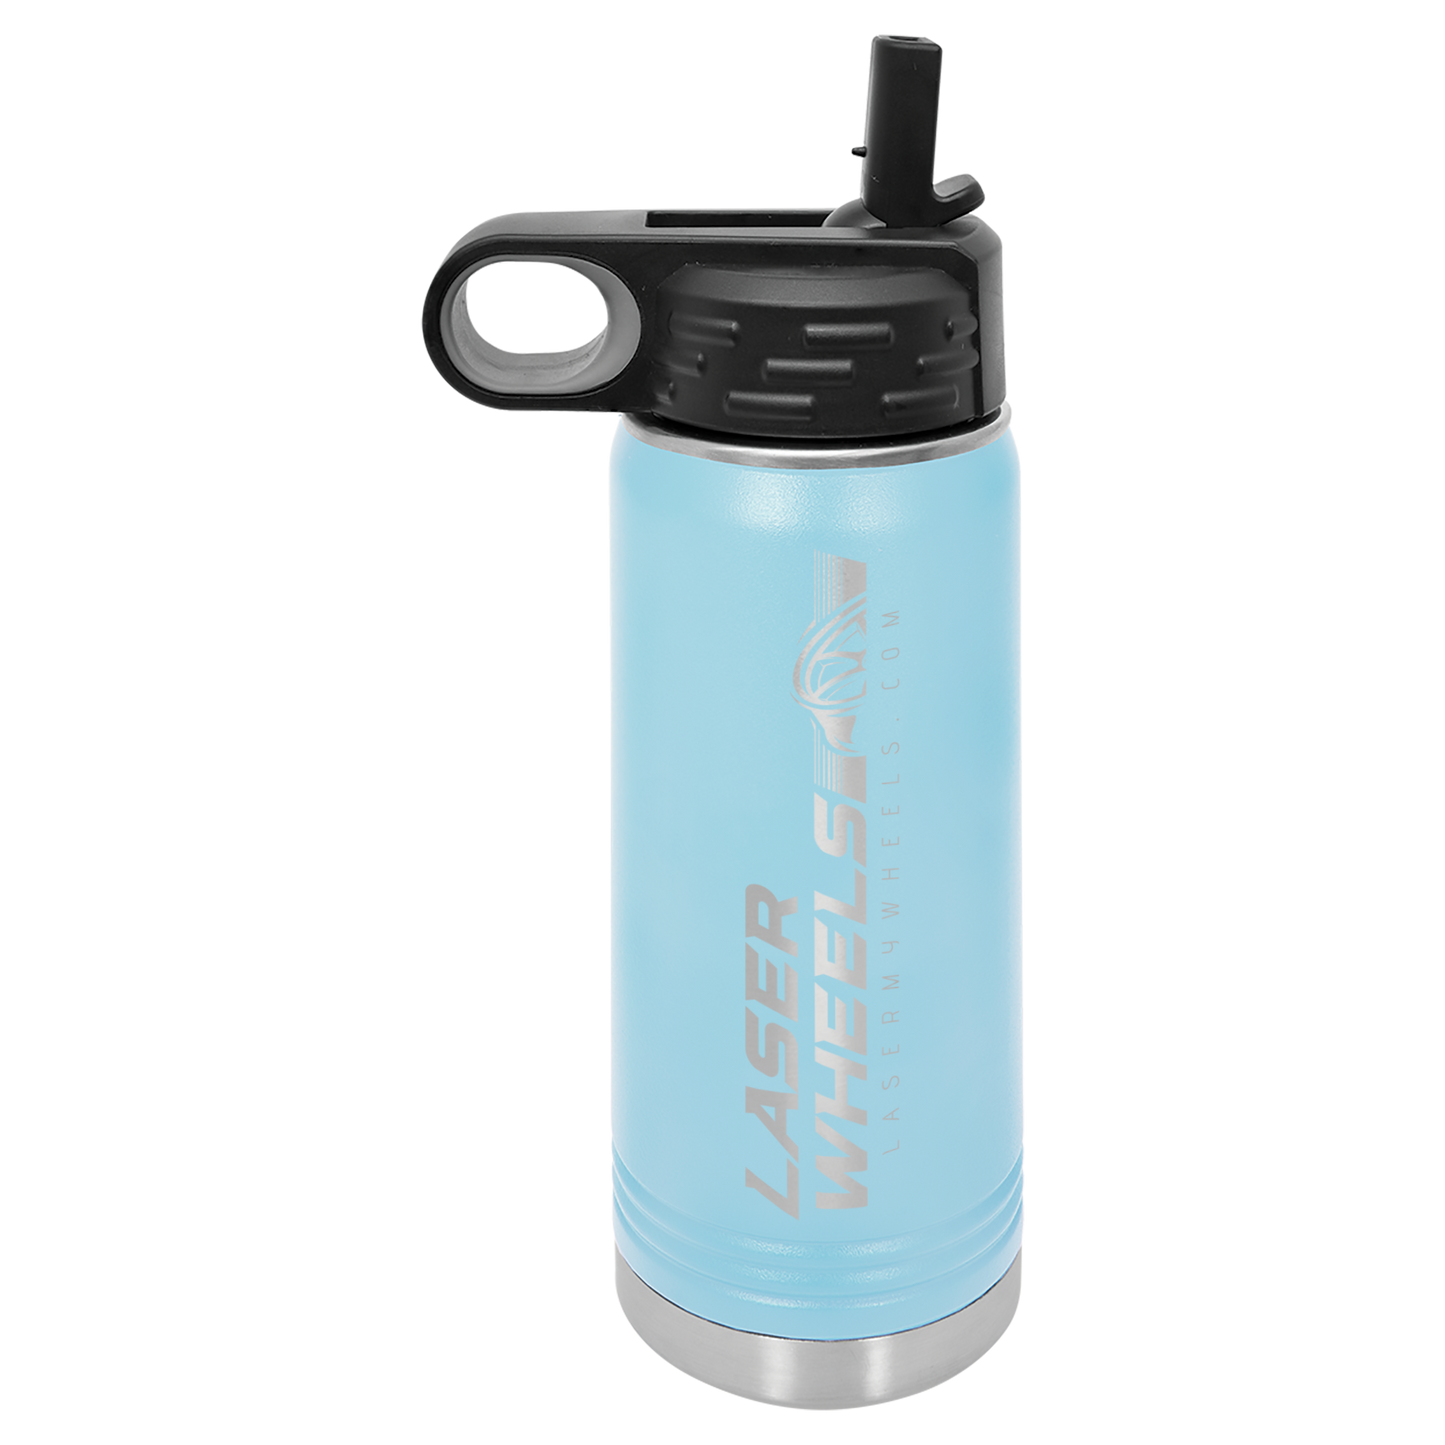 Laser Engraved 34 oz Water Bottles With Your Design - No Minimums